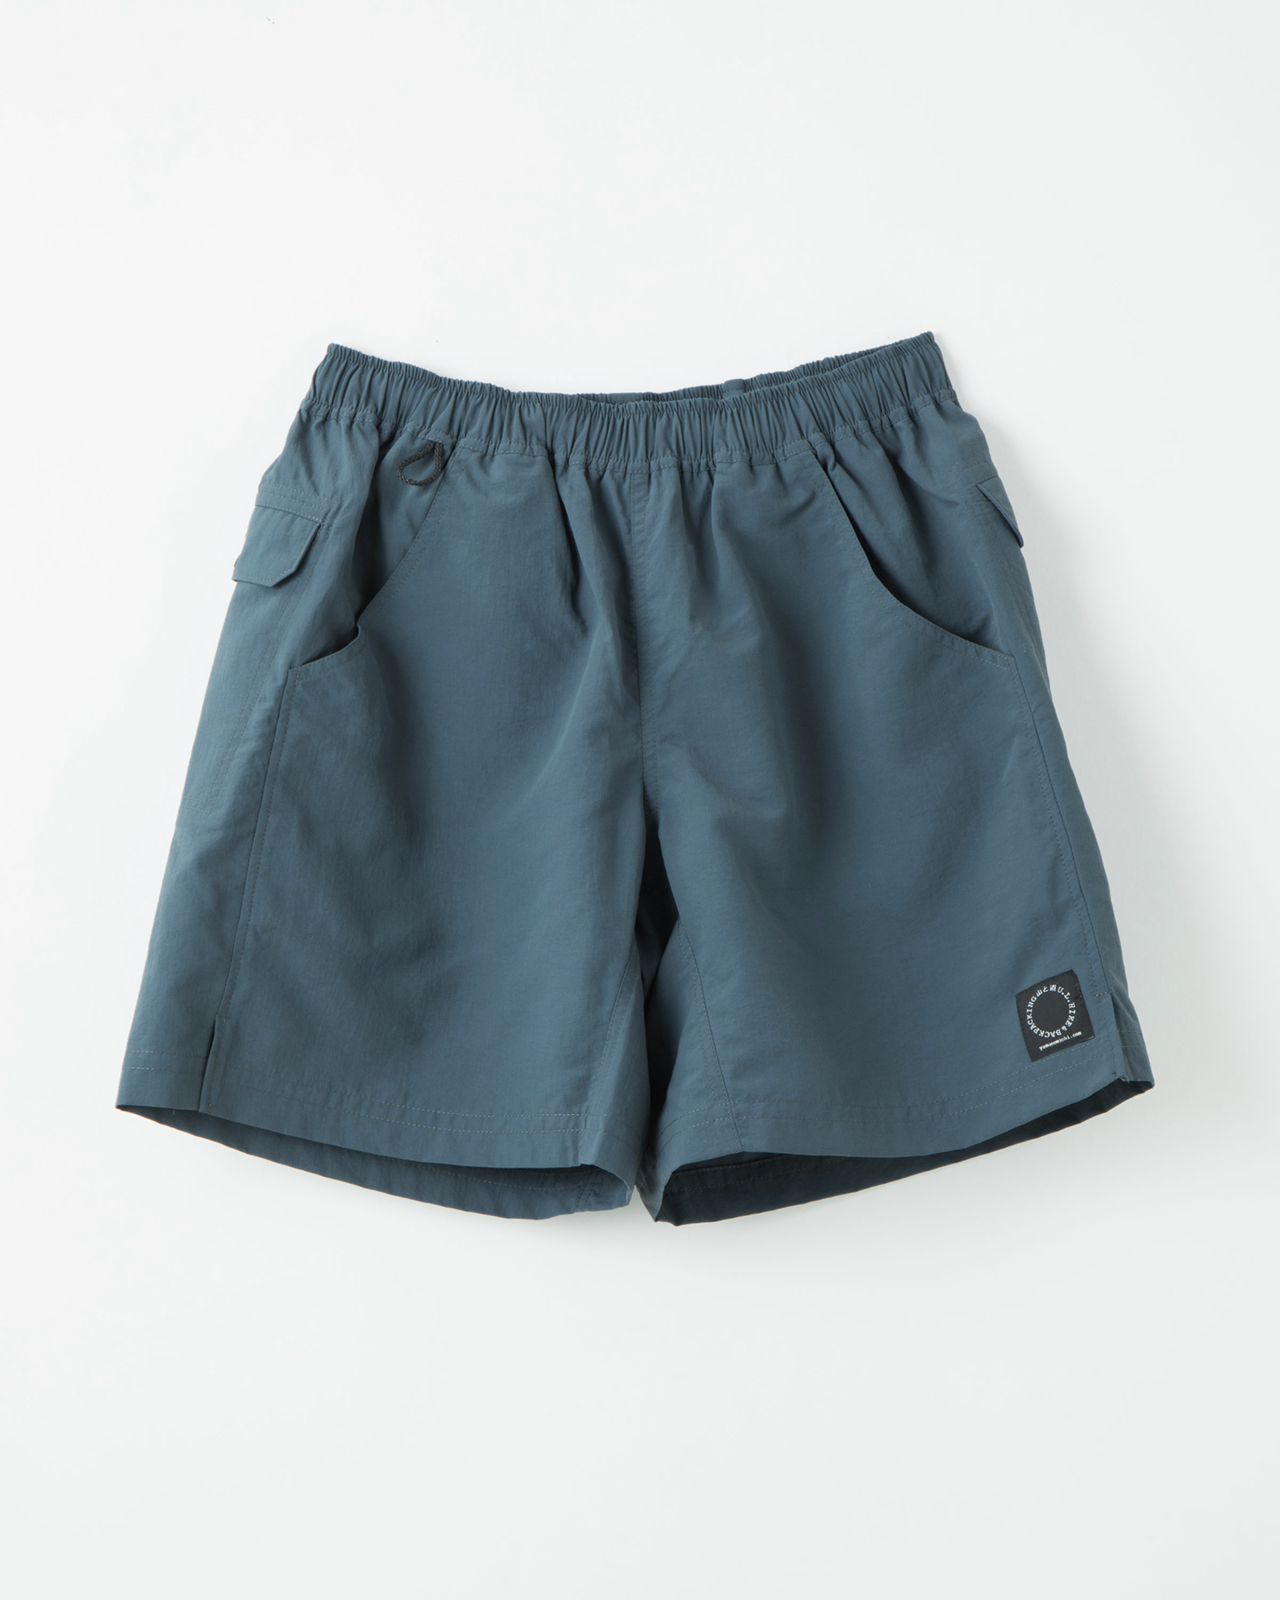 5-Pocket Shorts、5-Pocket Pants追加販売のお知らせ | 山と道 U.L. ...